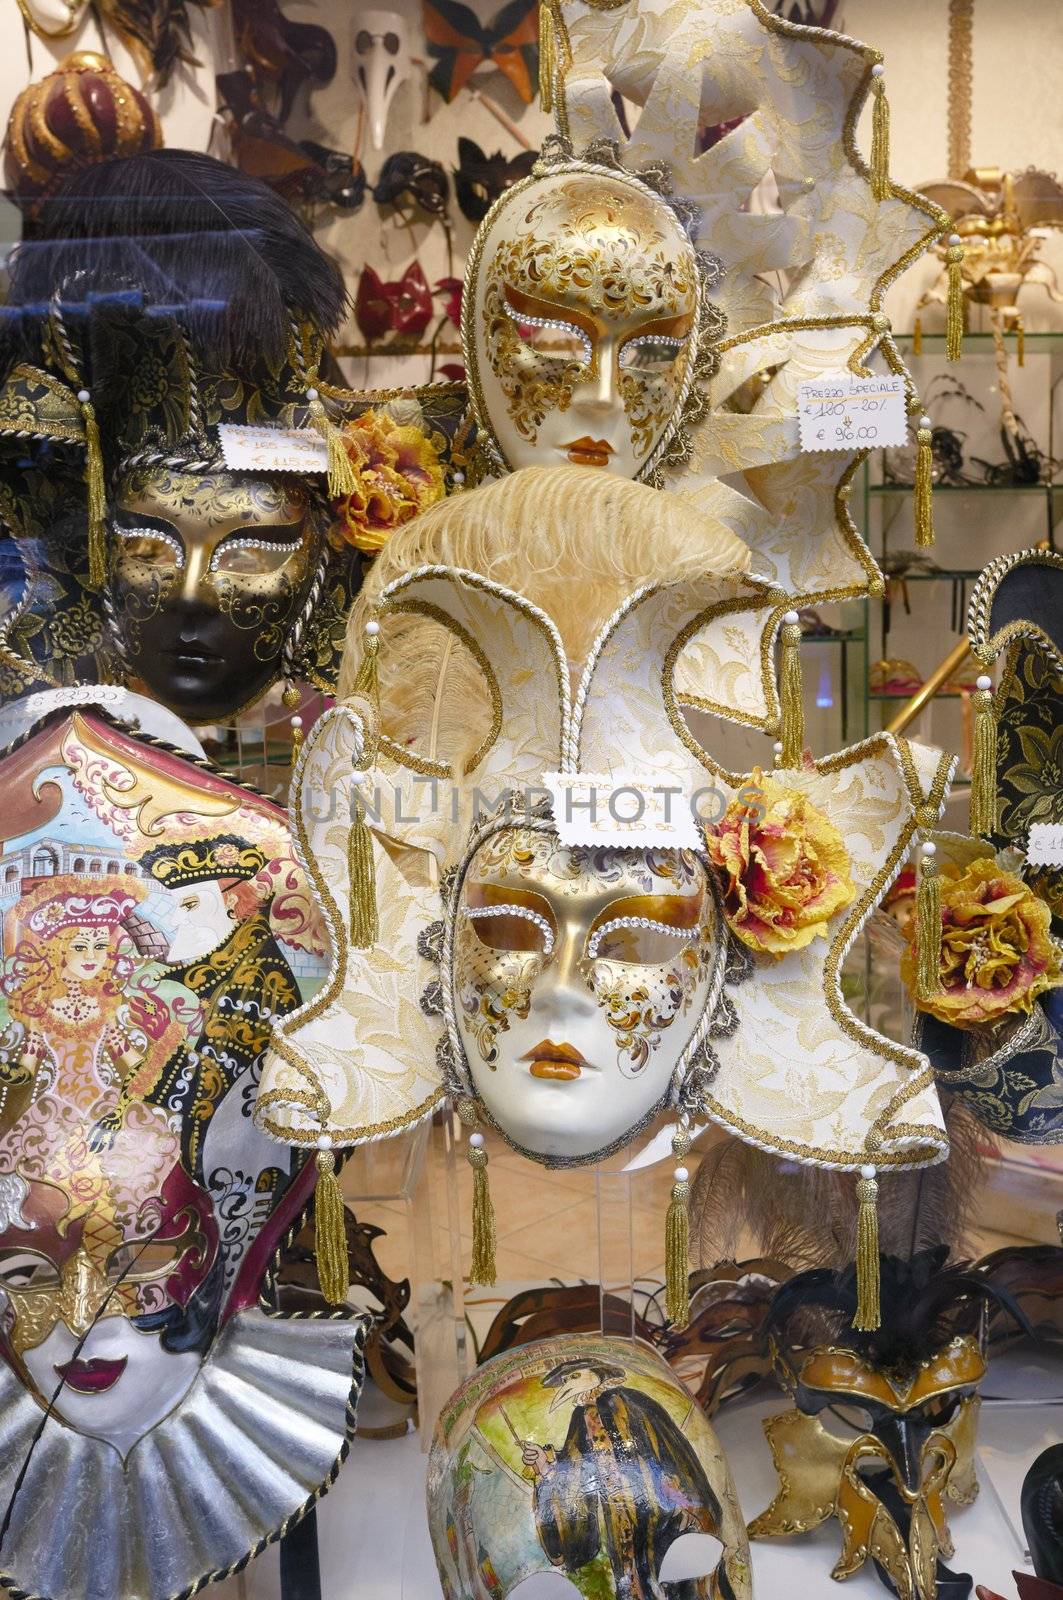 VENICE, VENETO, ITALY - MAY 24, 2011: Venetian masks for sale in a shop window in Venice. May 24, 2011 in Venice, Veneto, Italy